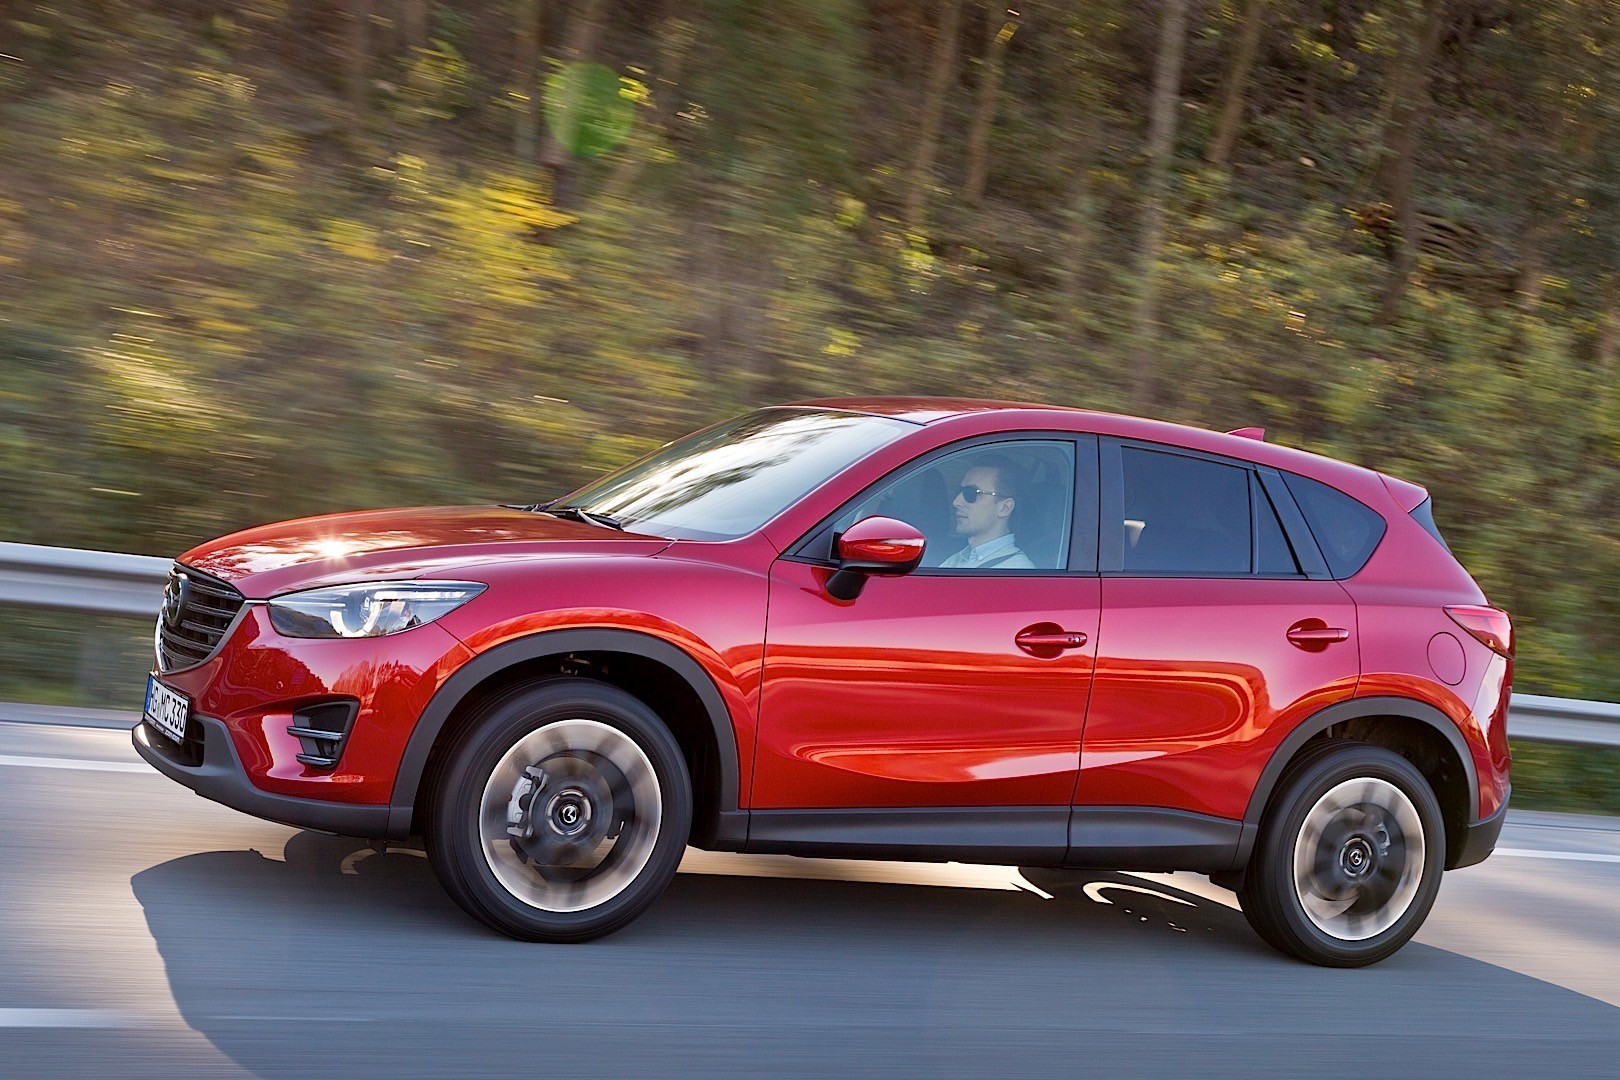 Mazda CX5 Production Milestone One Million Units Built